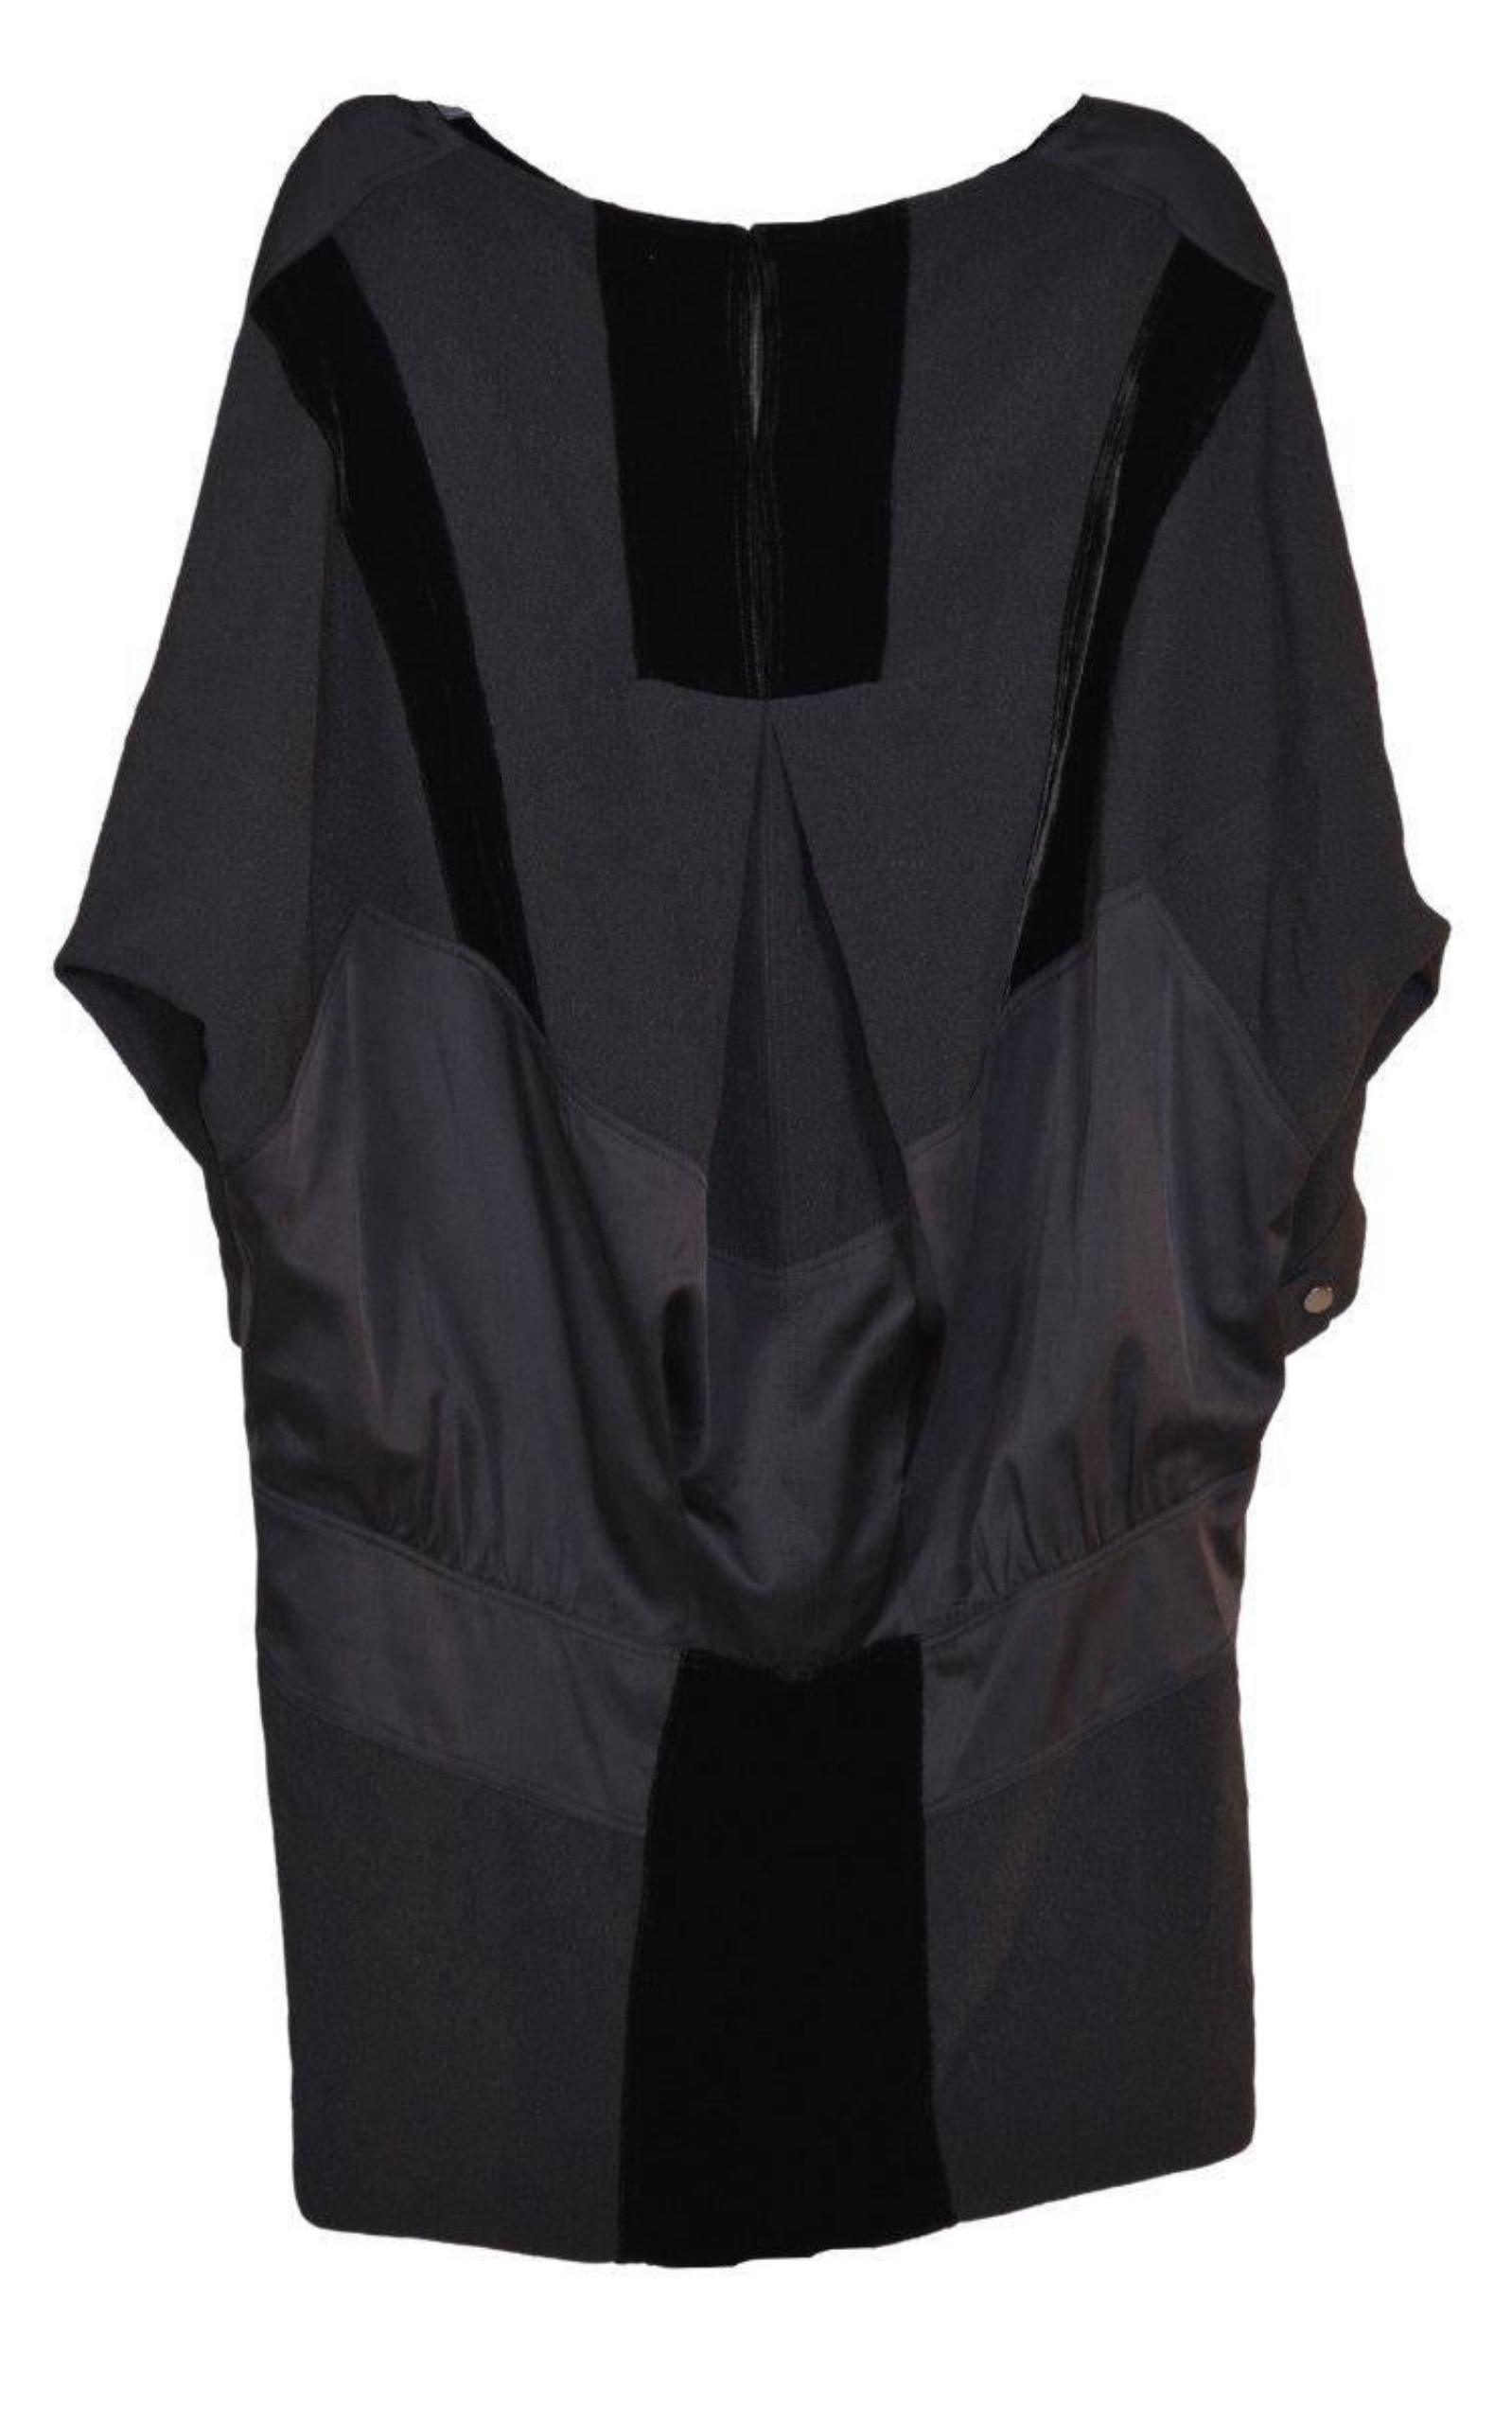  BCBGMAXAZRIABlack Bat Sleeve Mini Dress - Runway Catalog